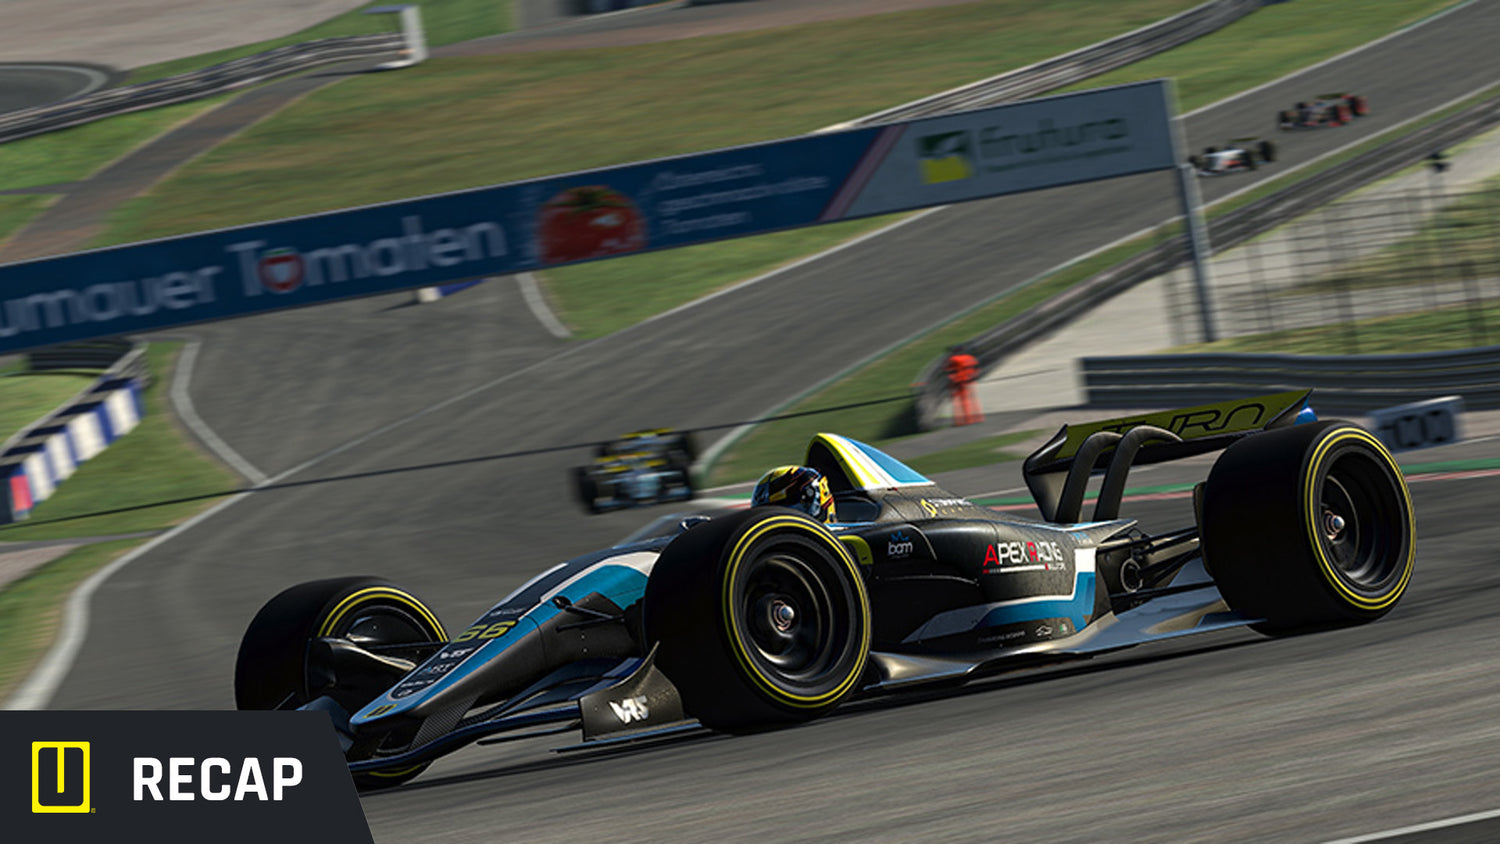 Grand Prix Turn Racing iRacing Series Race 8 Recap